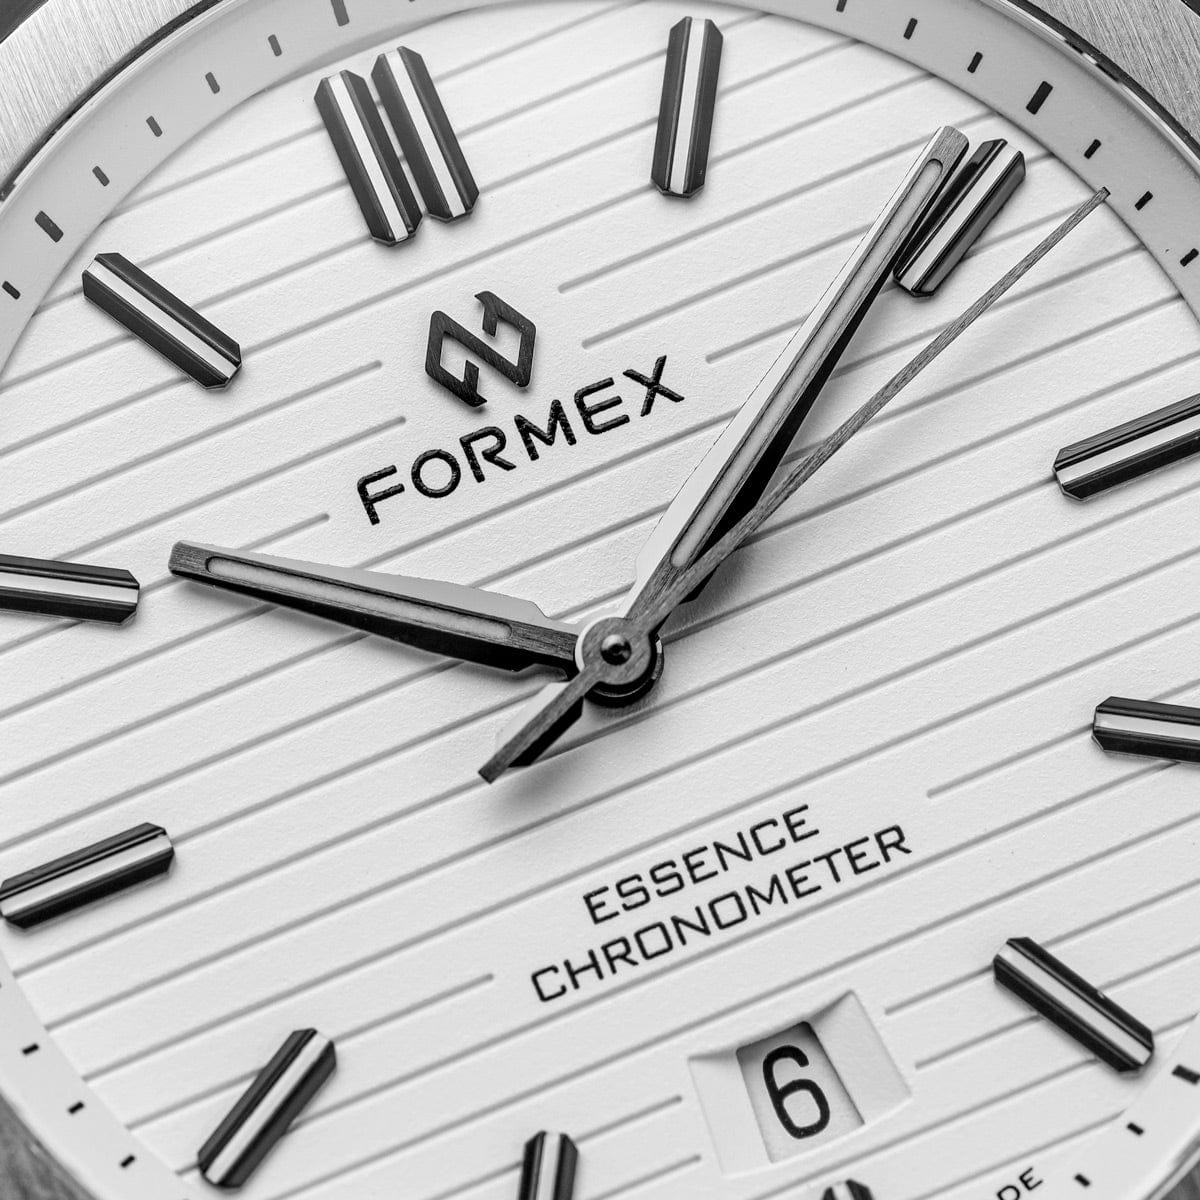 Formex Essence 43 Automatic Chronometer - Green